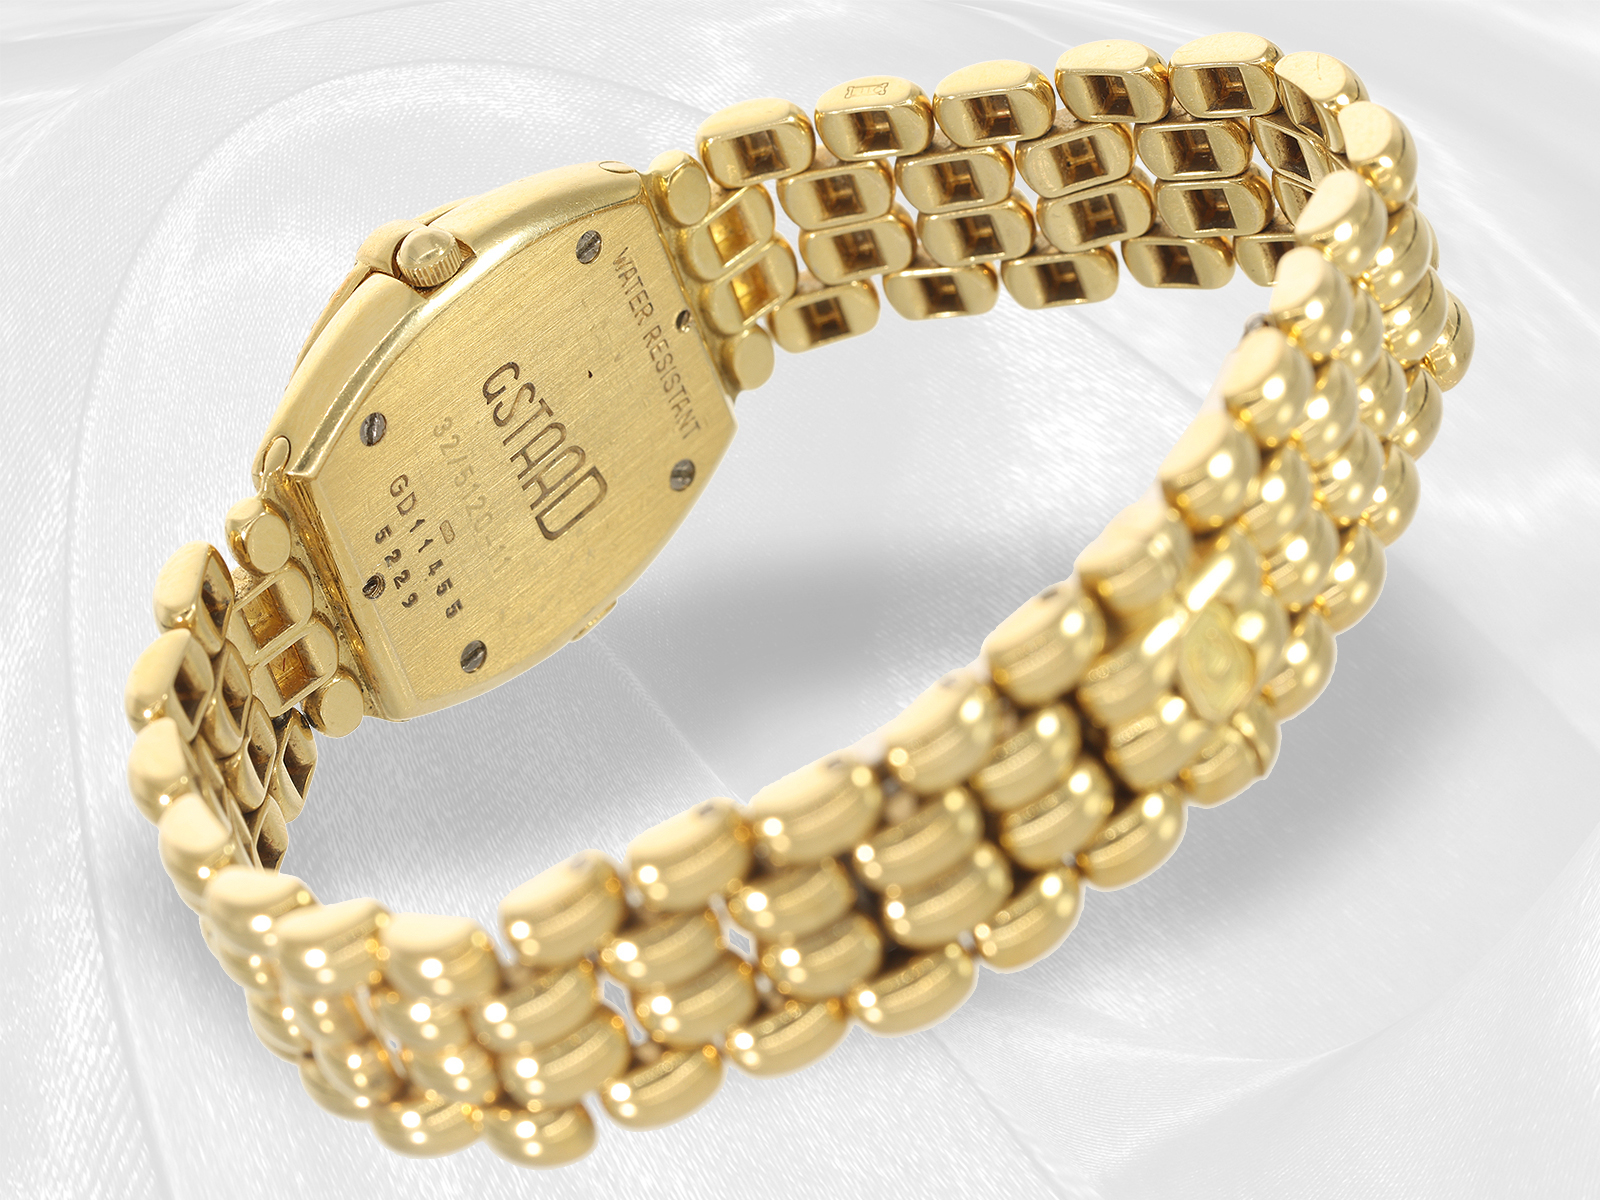 Wristwatch: luxury heavy ladies' watch Chopard "GSTAAD", 18K gold with diamond bezel, Ref.5229 - Image 4 of 5